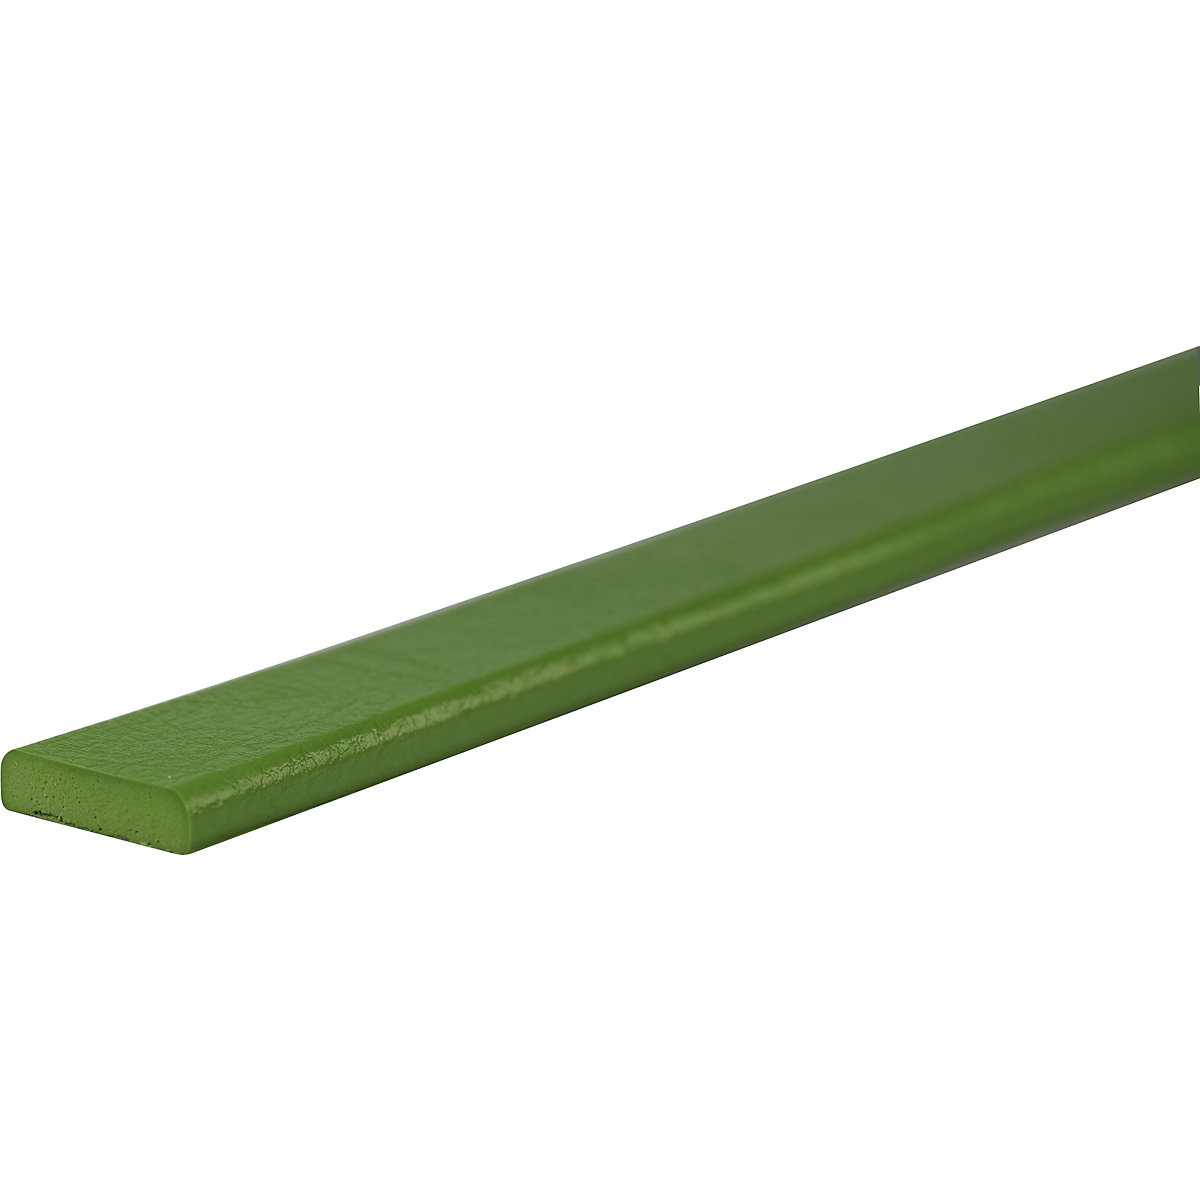 Knuffi®-oppervlaktebescherming – SHG, type F, stuk van 1 m, groen-36